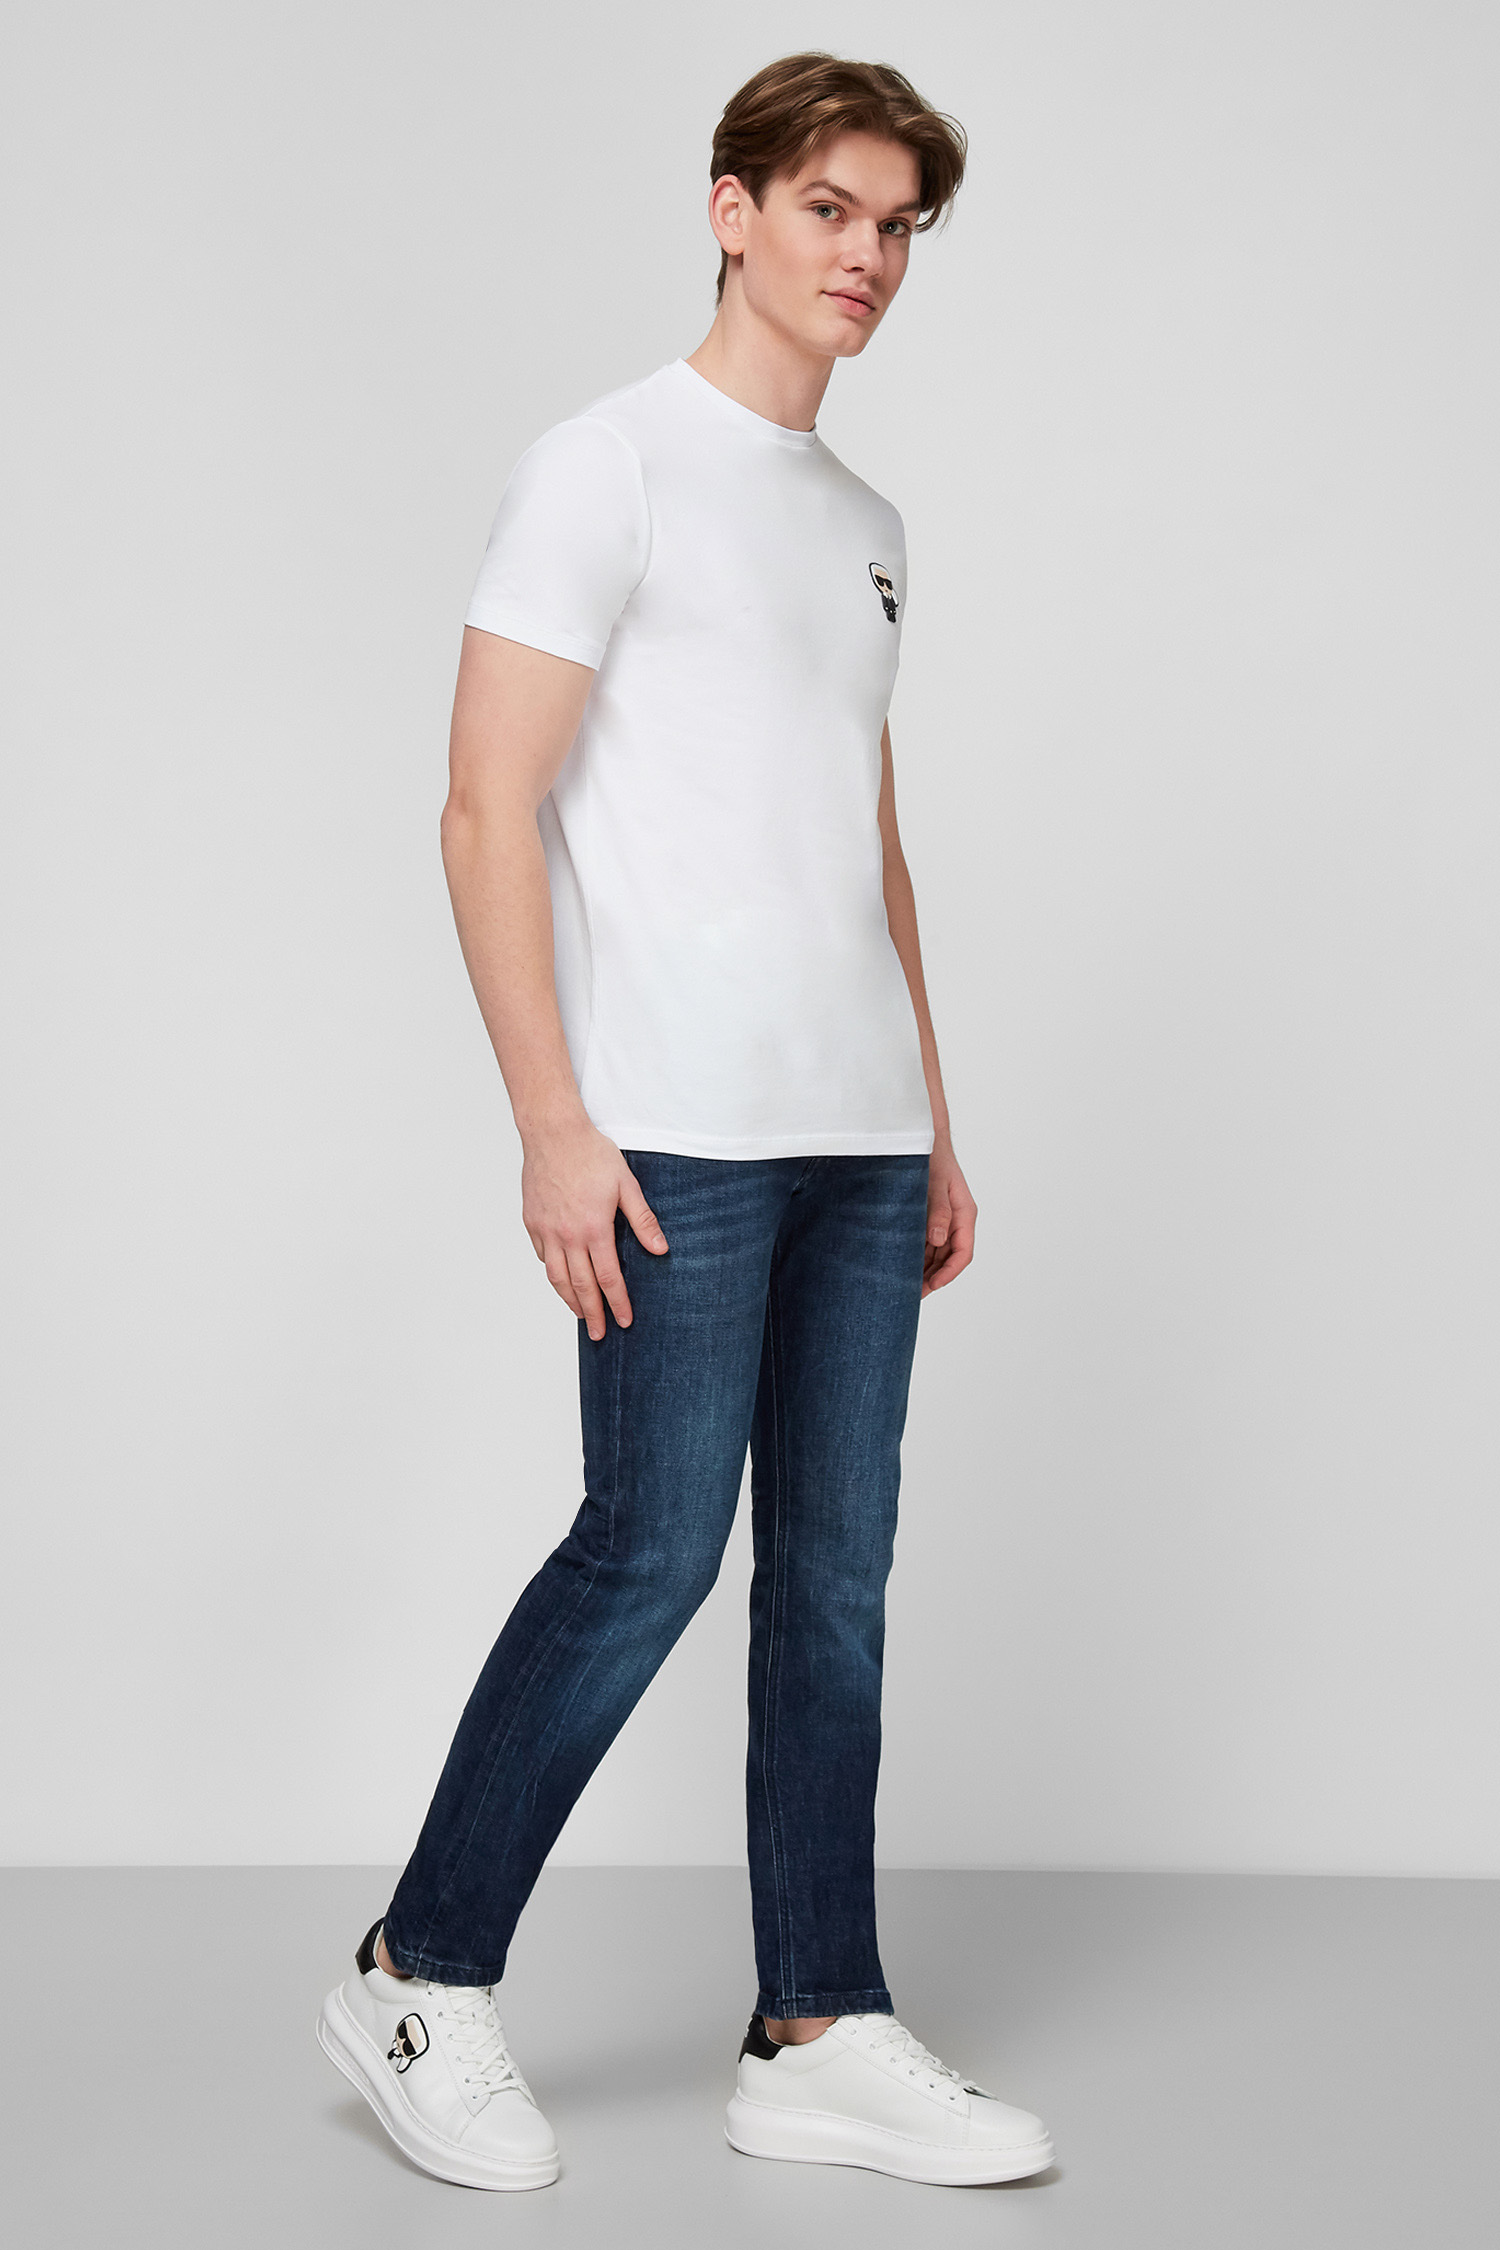 Белая футболка для парней Karl Lagerfeld 511221.755025;10